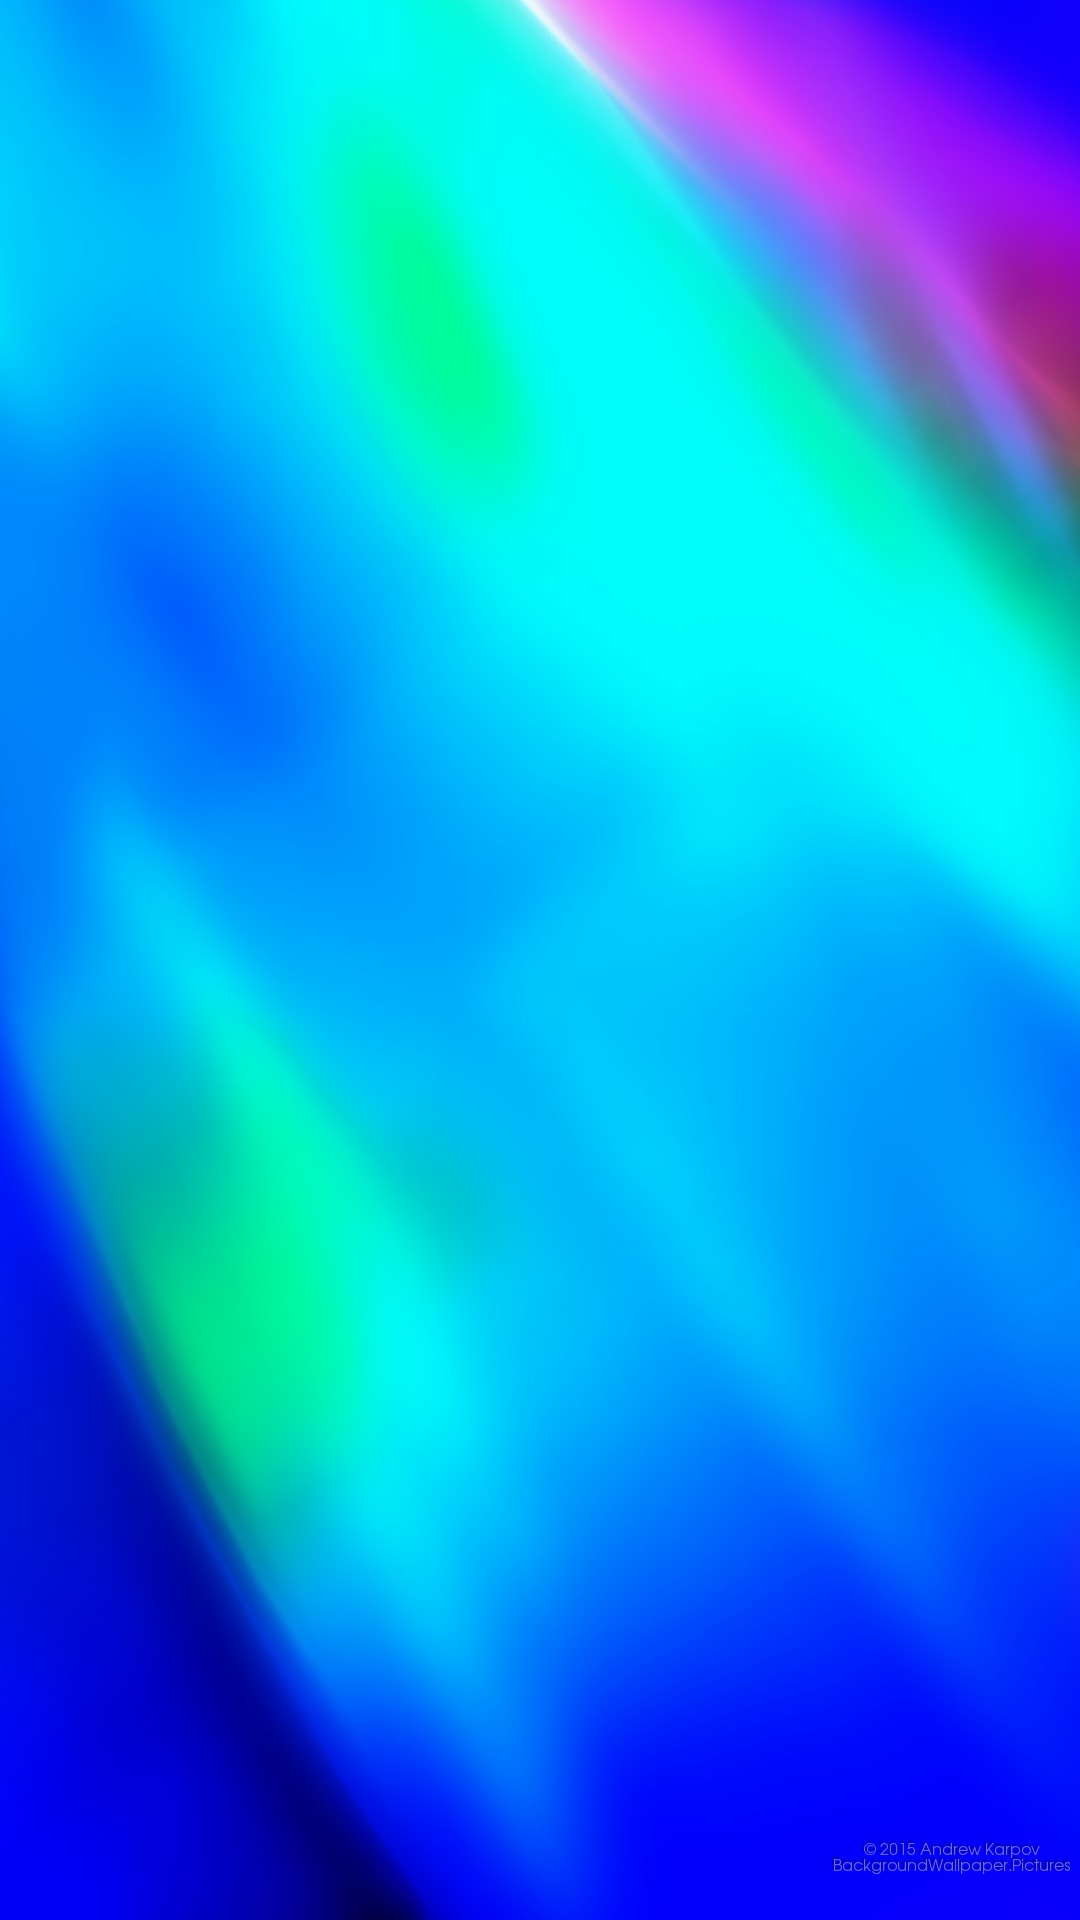 samsung galaxy j3 wallpaper,blau,grün,aqua,licht,türkis